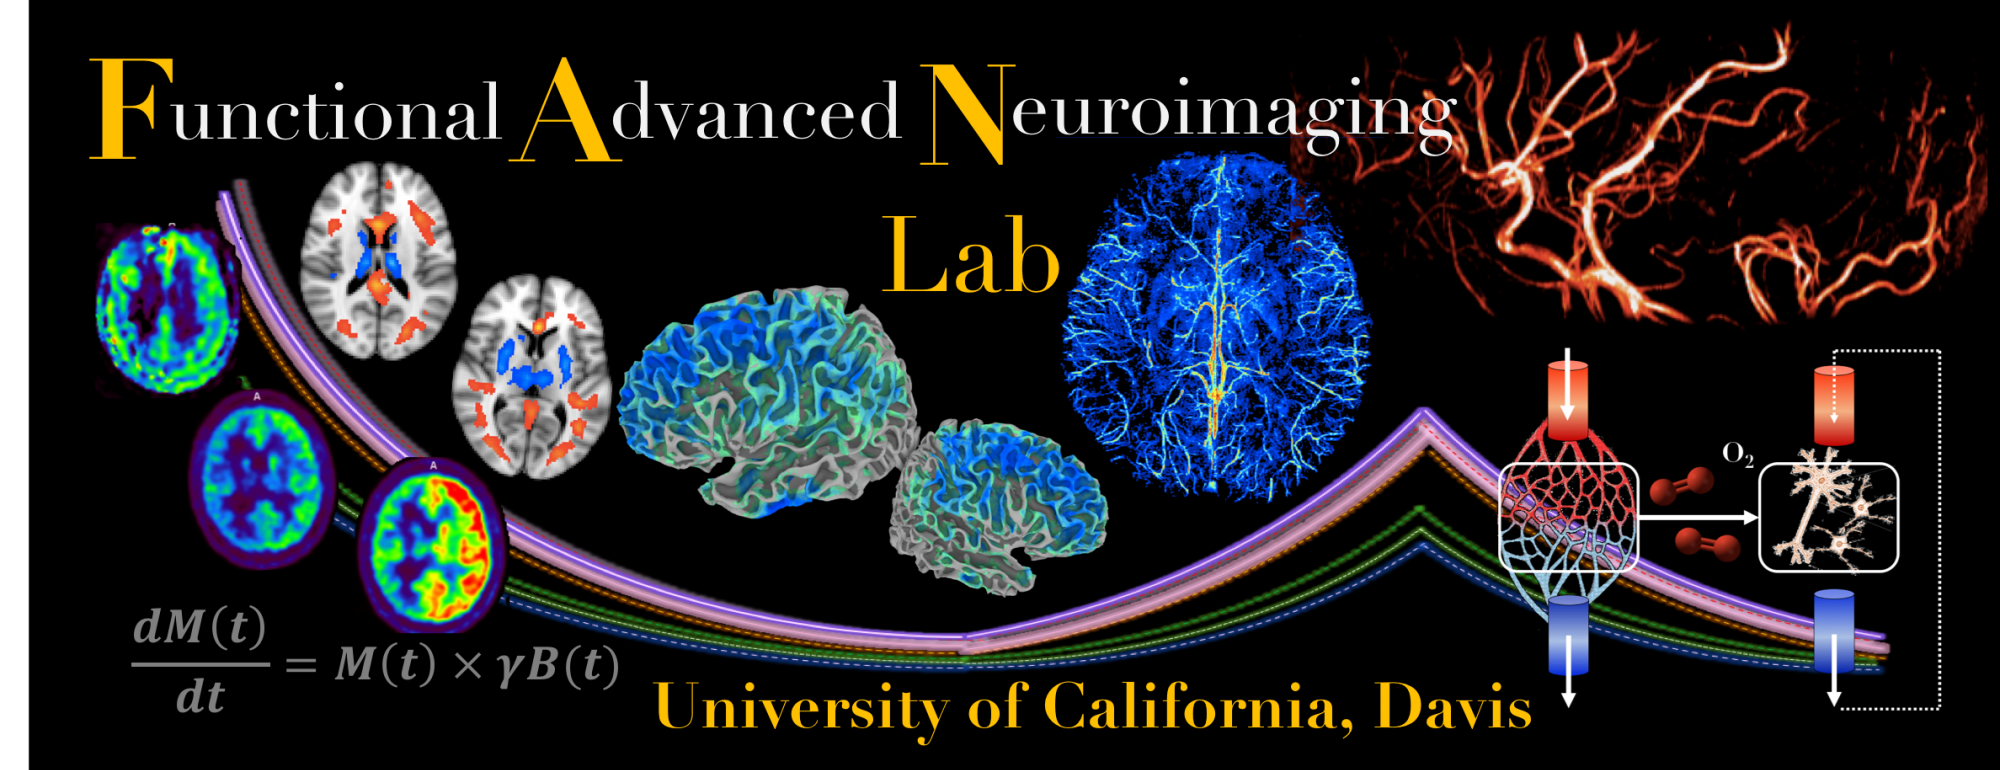 Functional Advanced Neuroimaging (FAN) Lab @ UC Davis